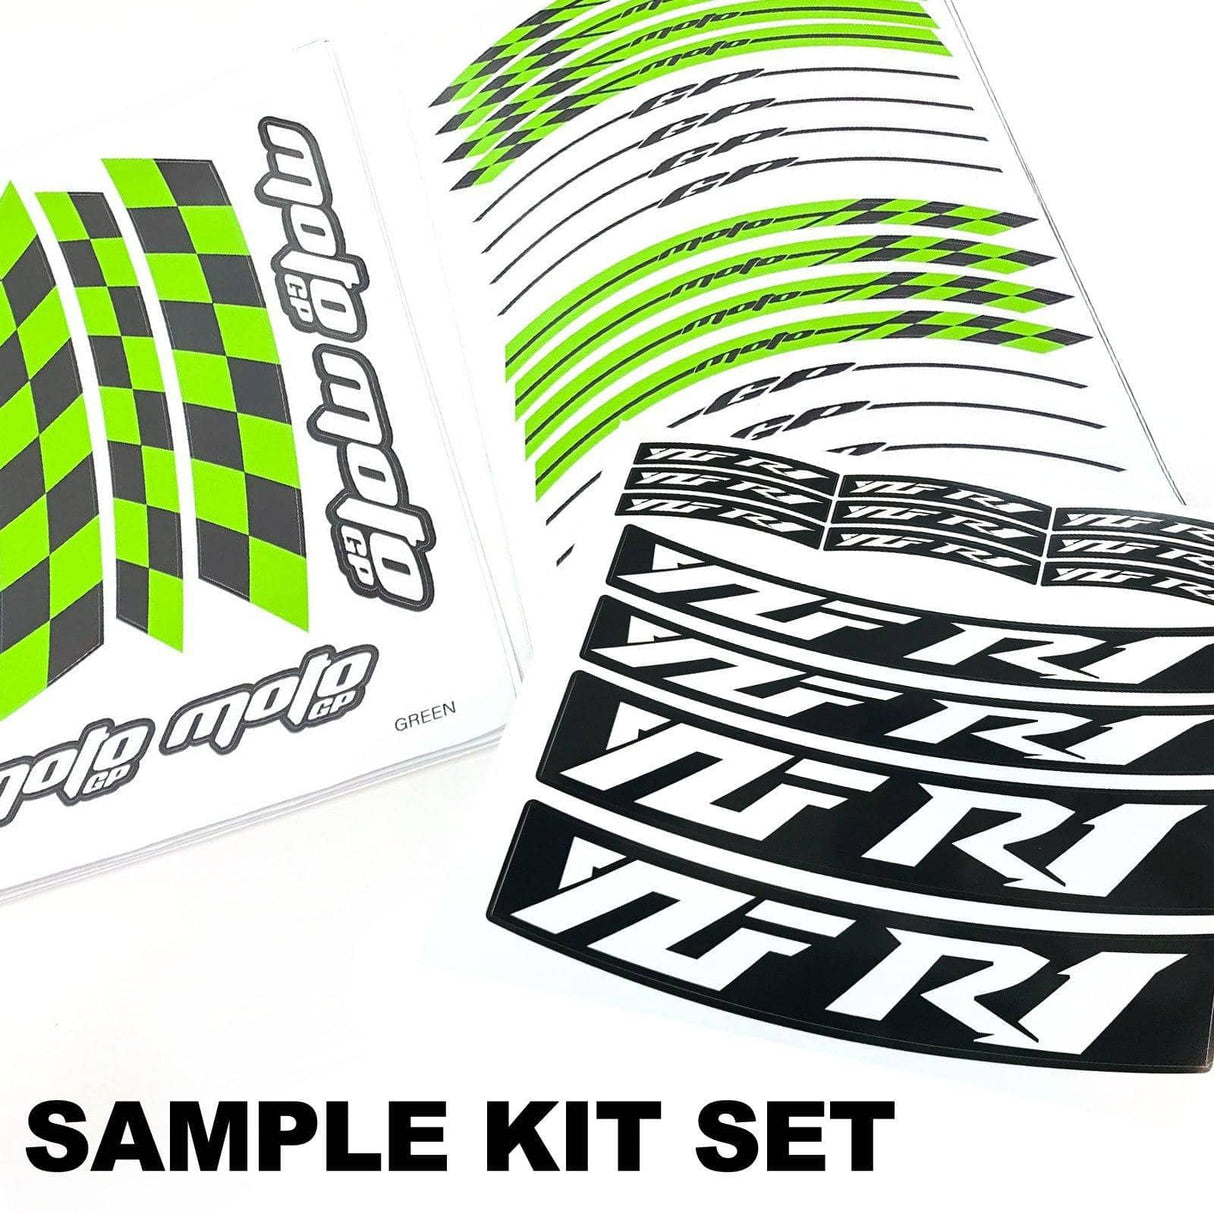 For Kawasaki Z900 Logo MOTO 17 inch Rim Wheel Stickers GP01 Racing Check.